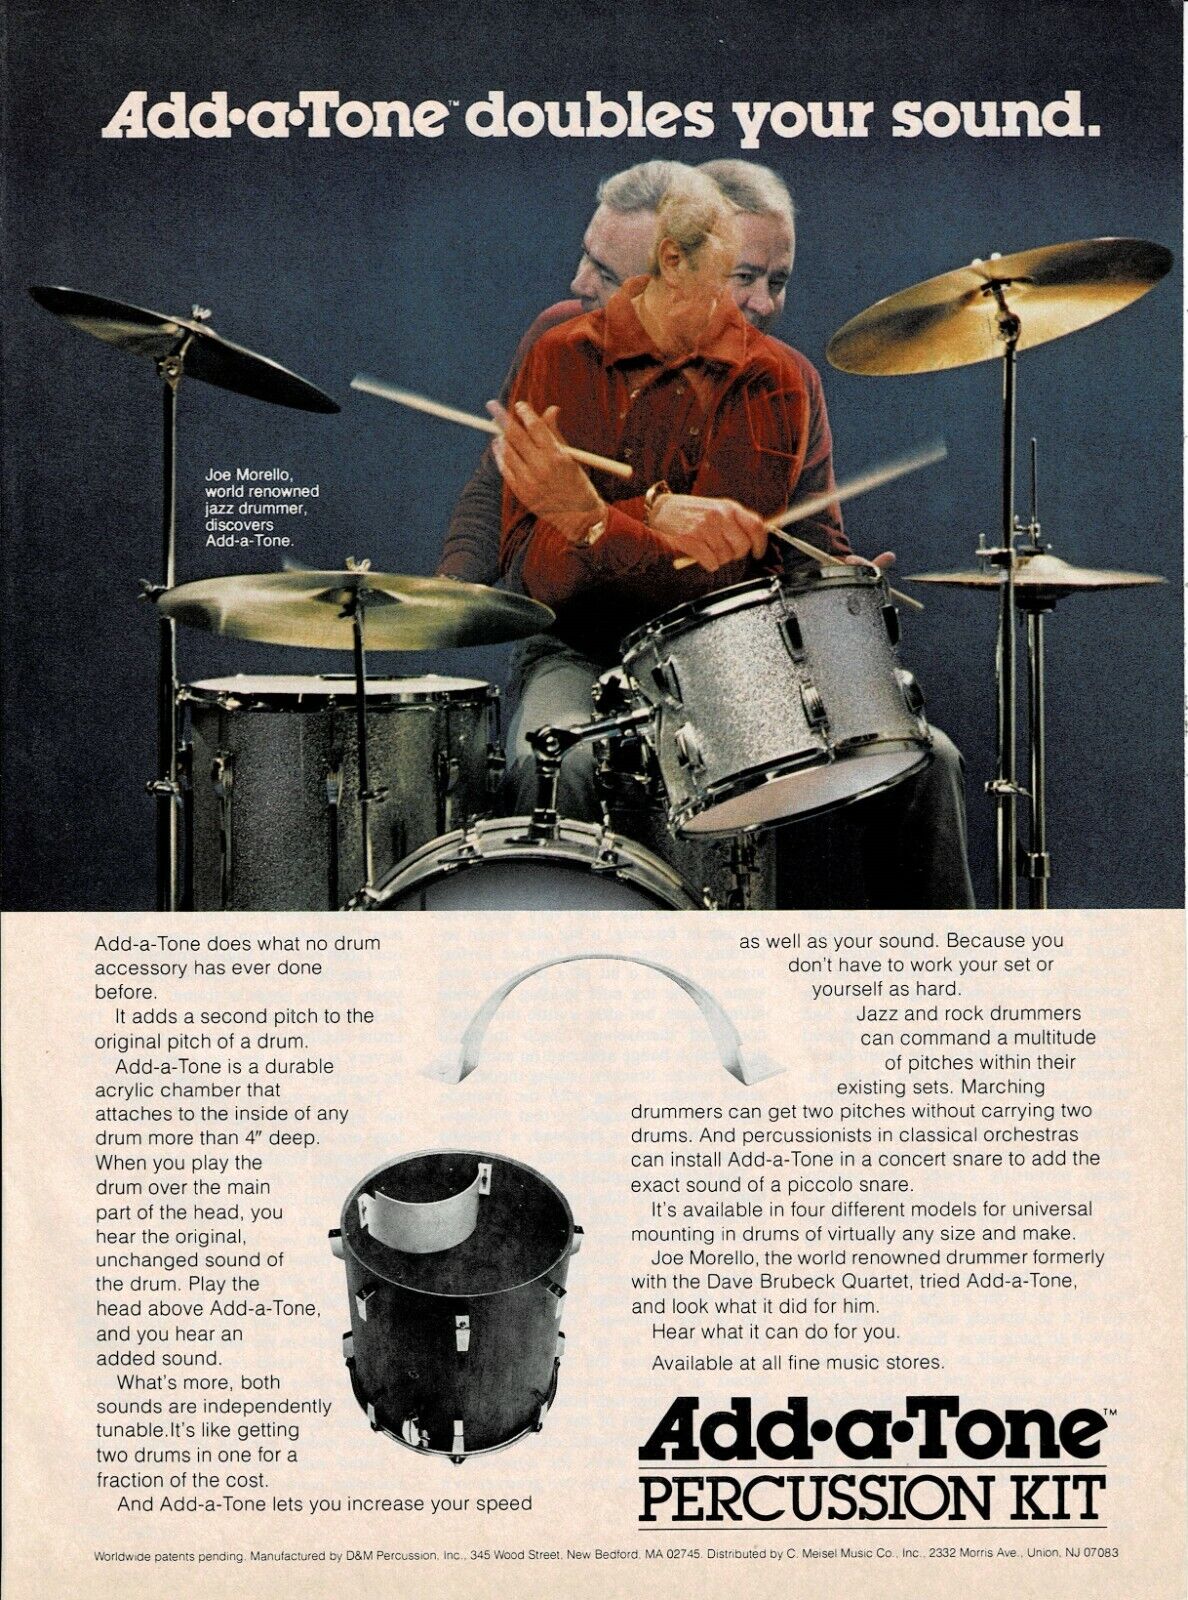 JOE MORELLO - Add-a-Tone Percussion Kit - 1981 Print Advertisement